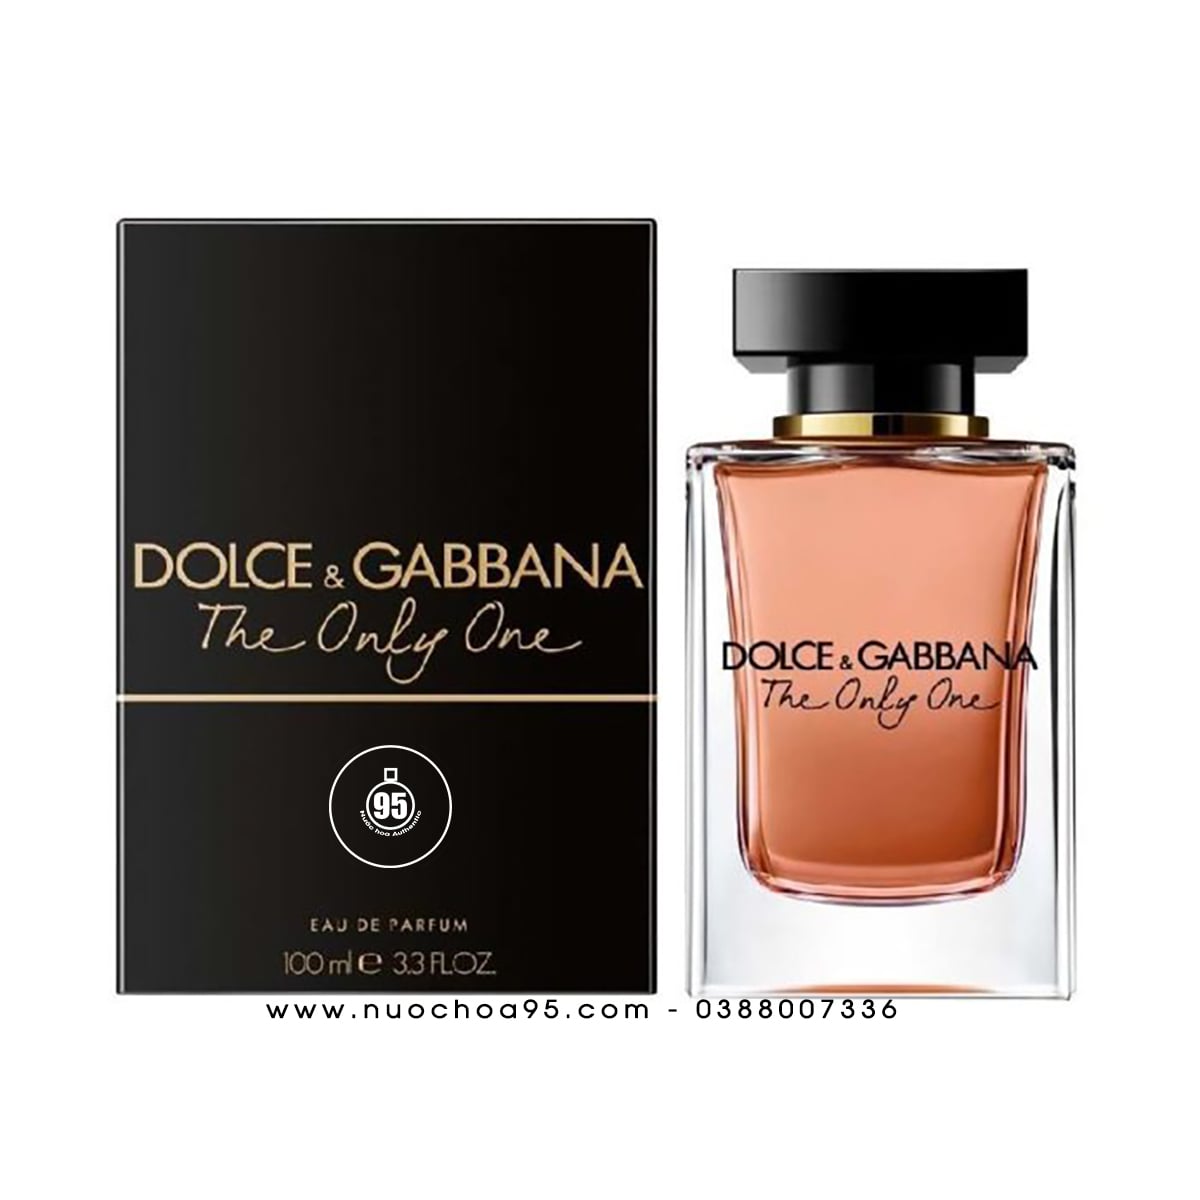 Nước hoa Dolce & Gabbana The Only One EDP